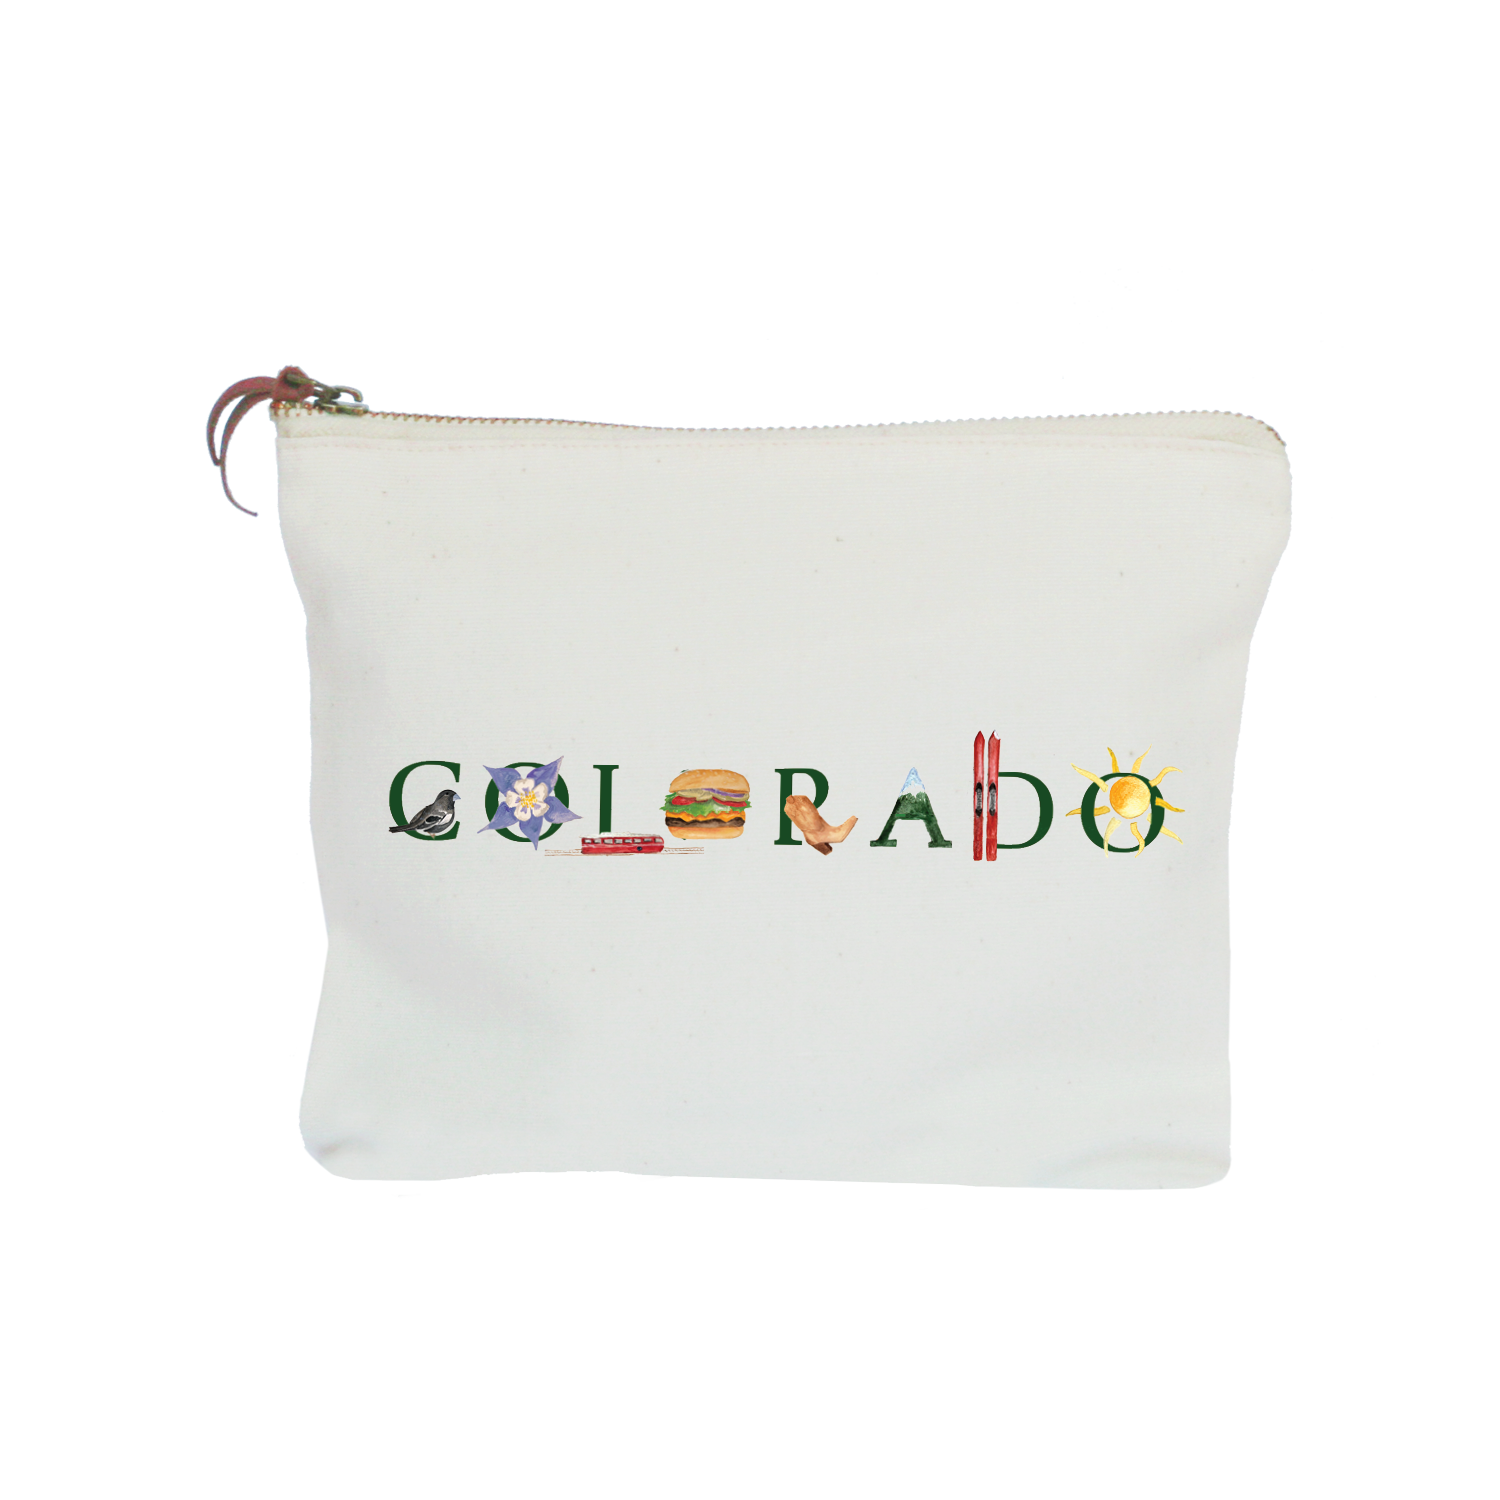 Colorado zipper pouch